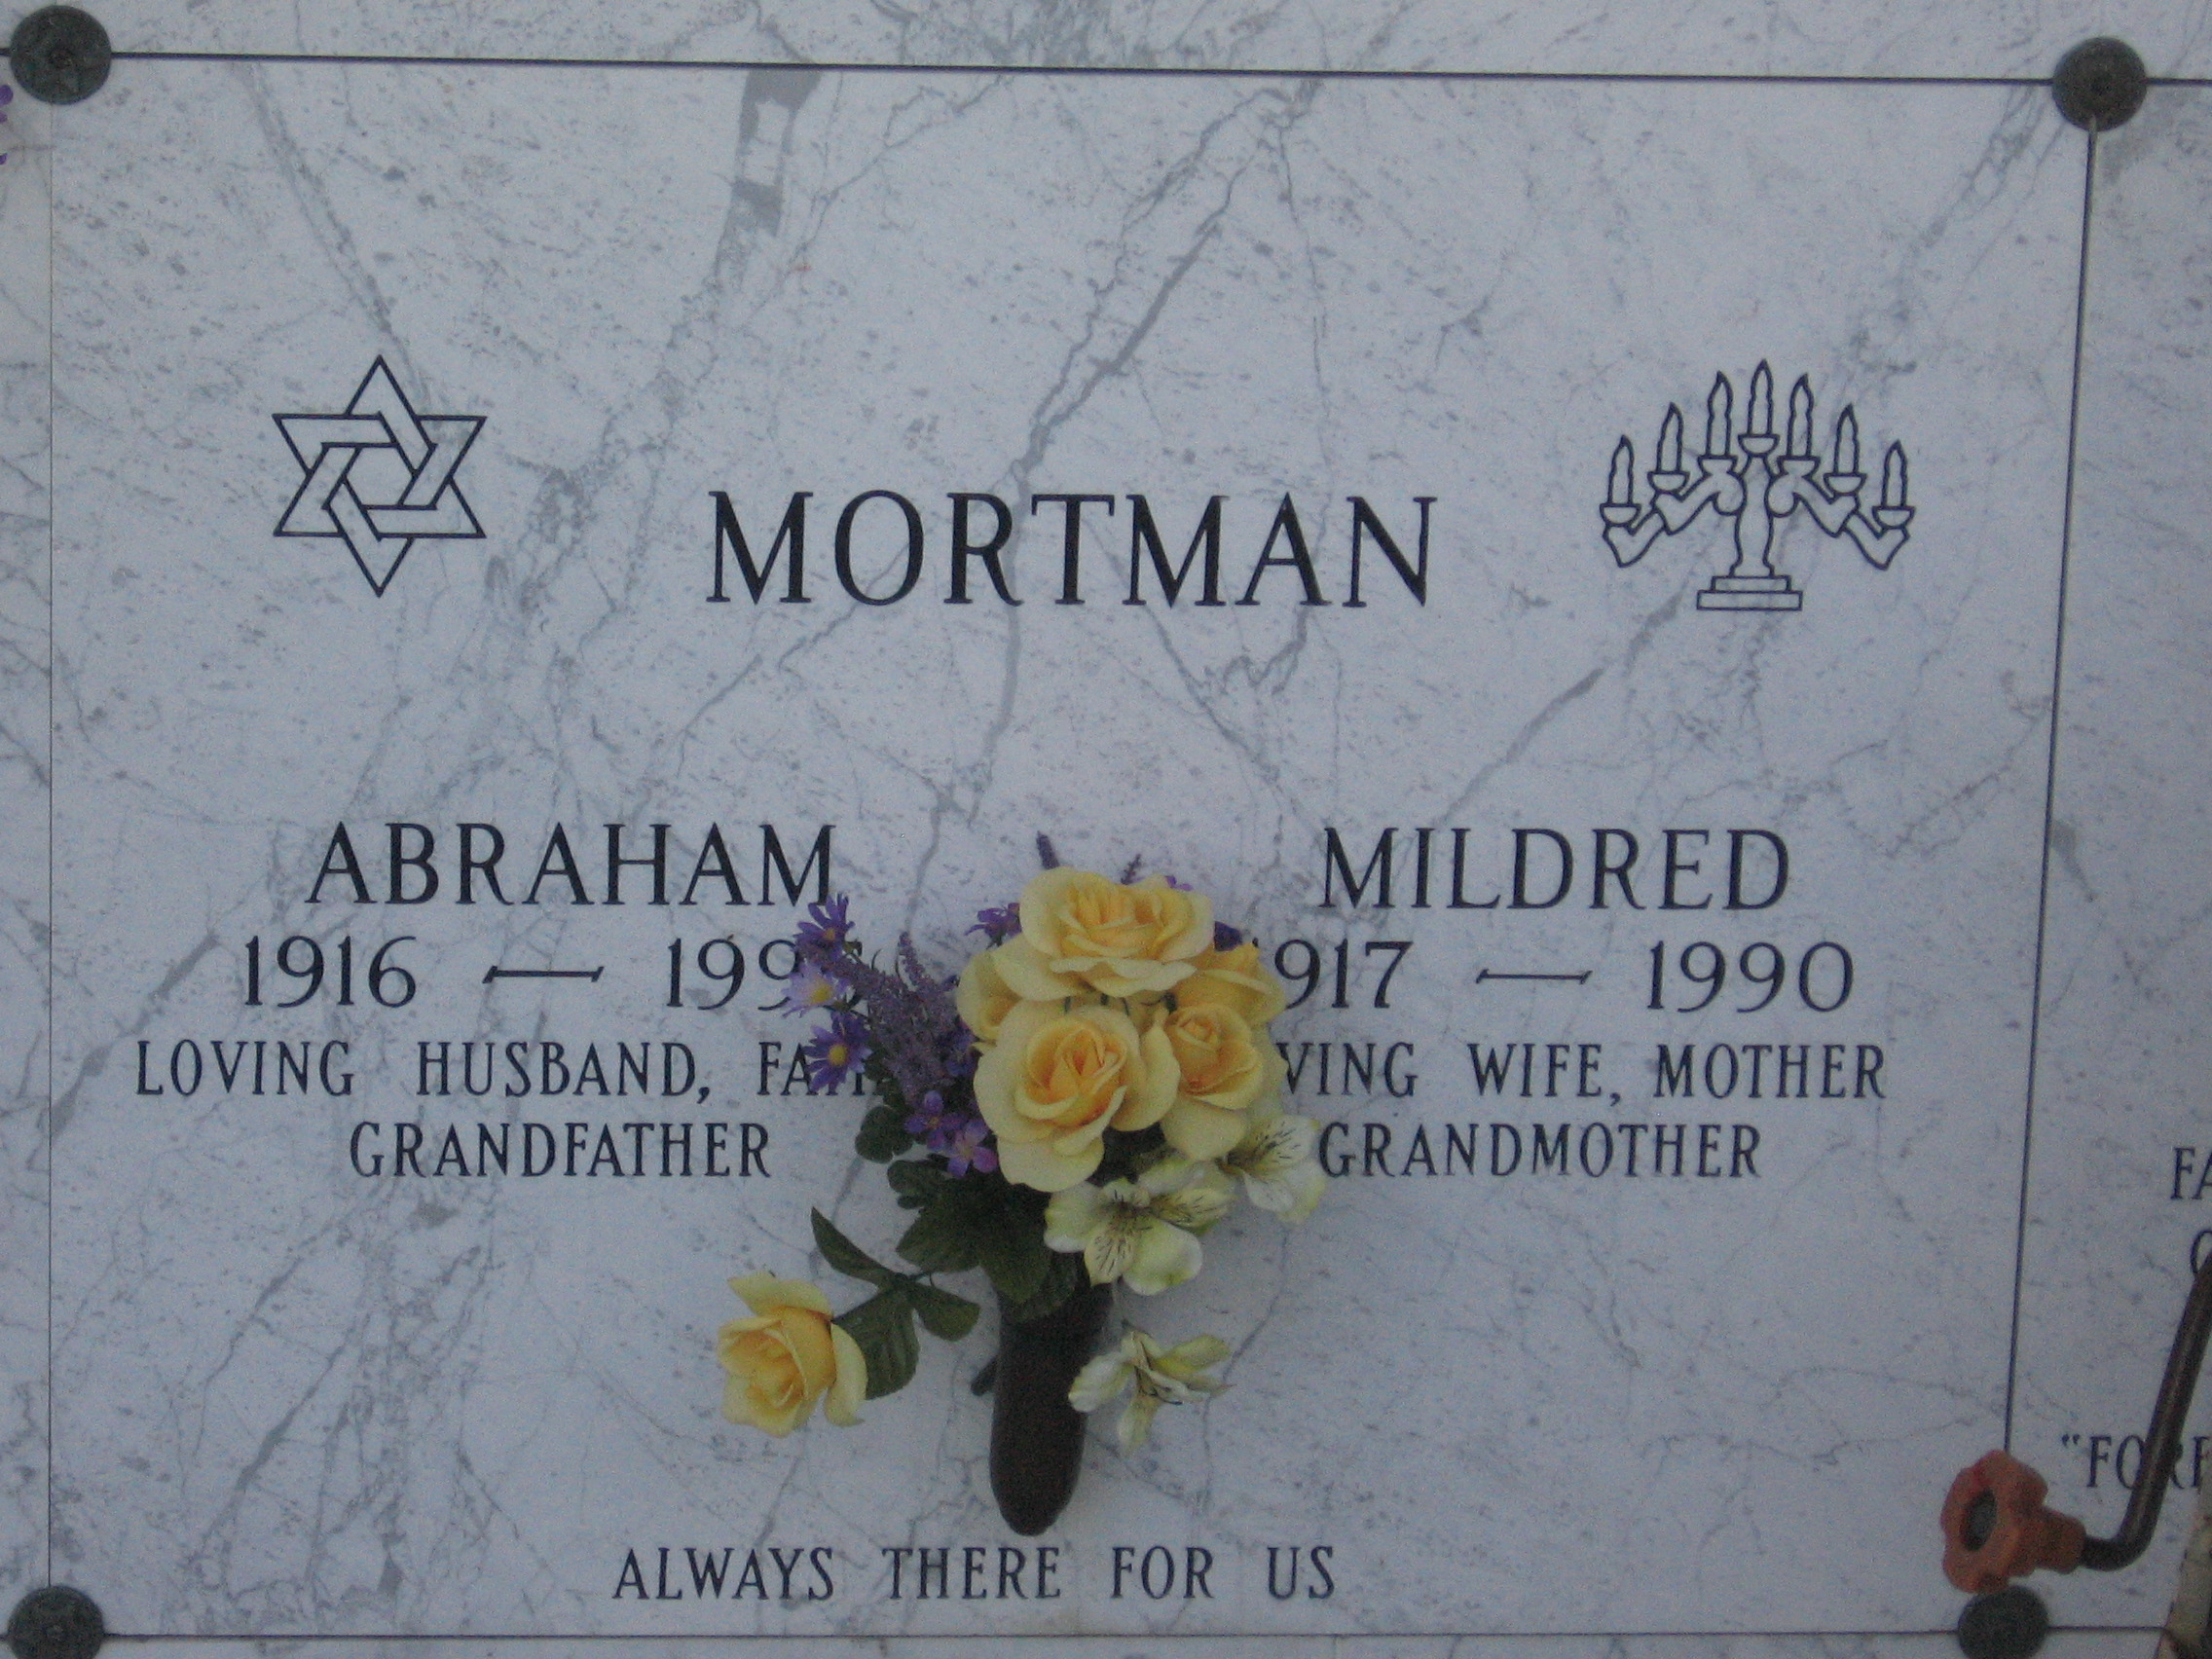 Abraham Mortman